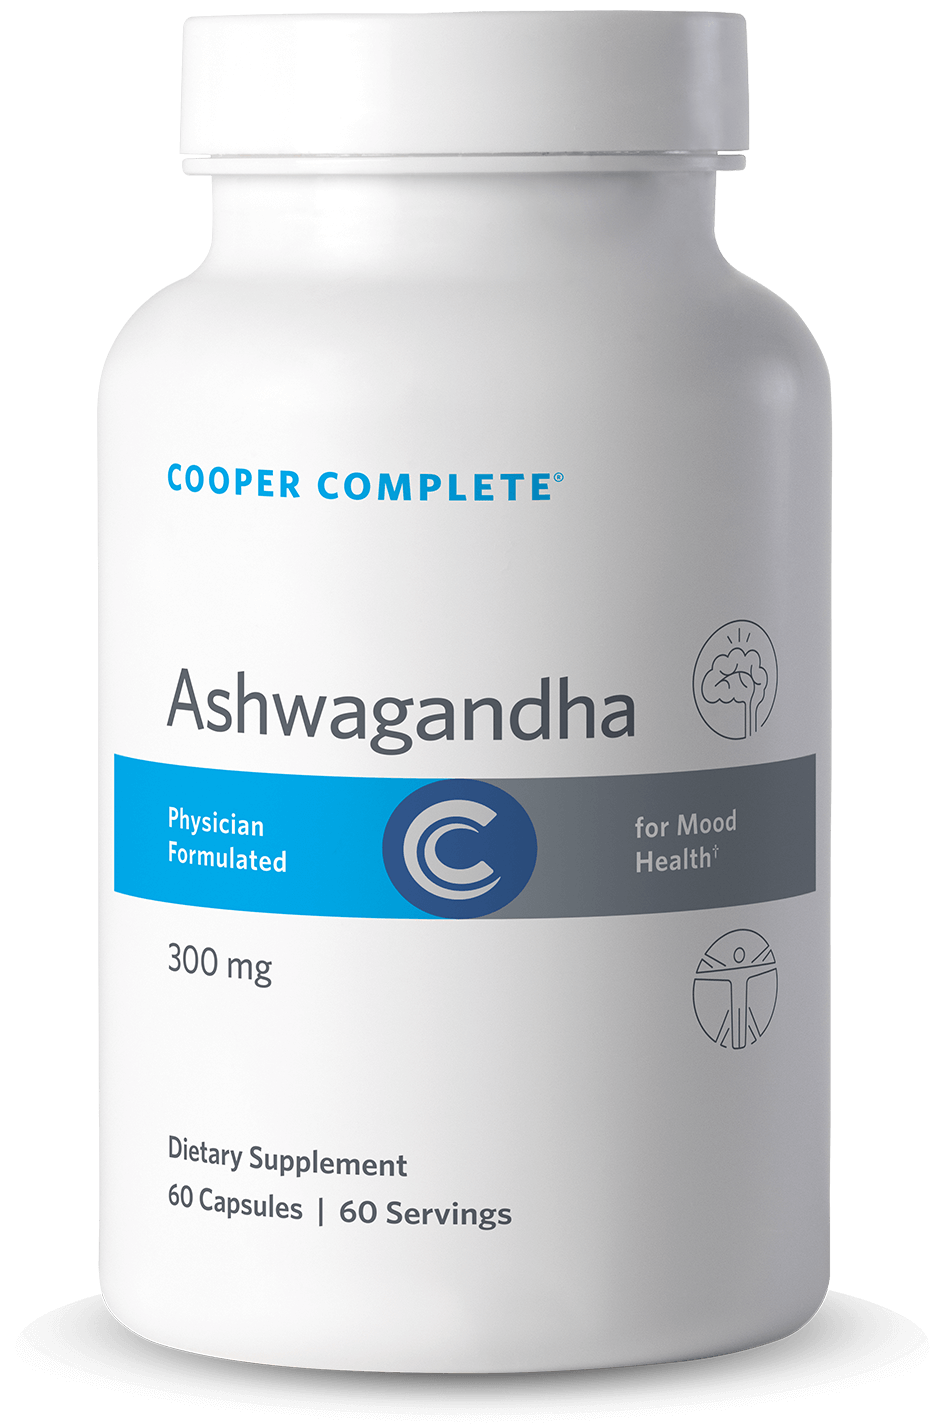 Photo of Cooper Complete Ashwagandha Supplement bottle.